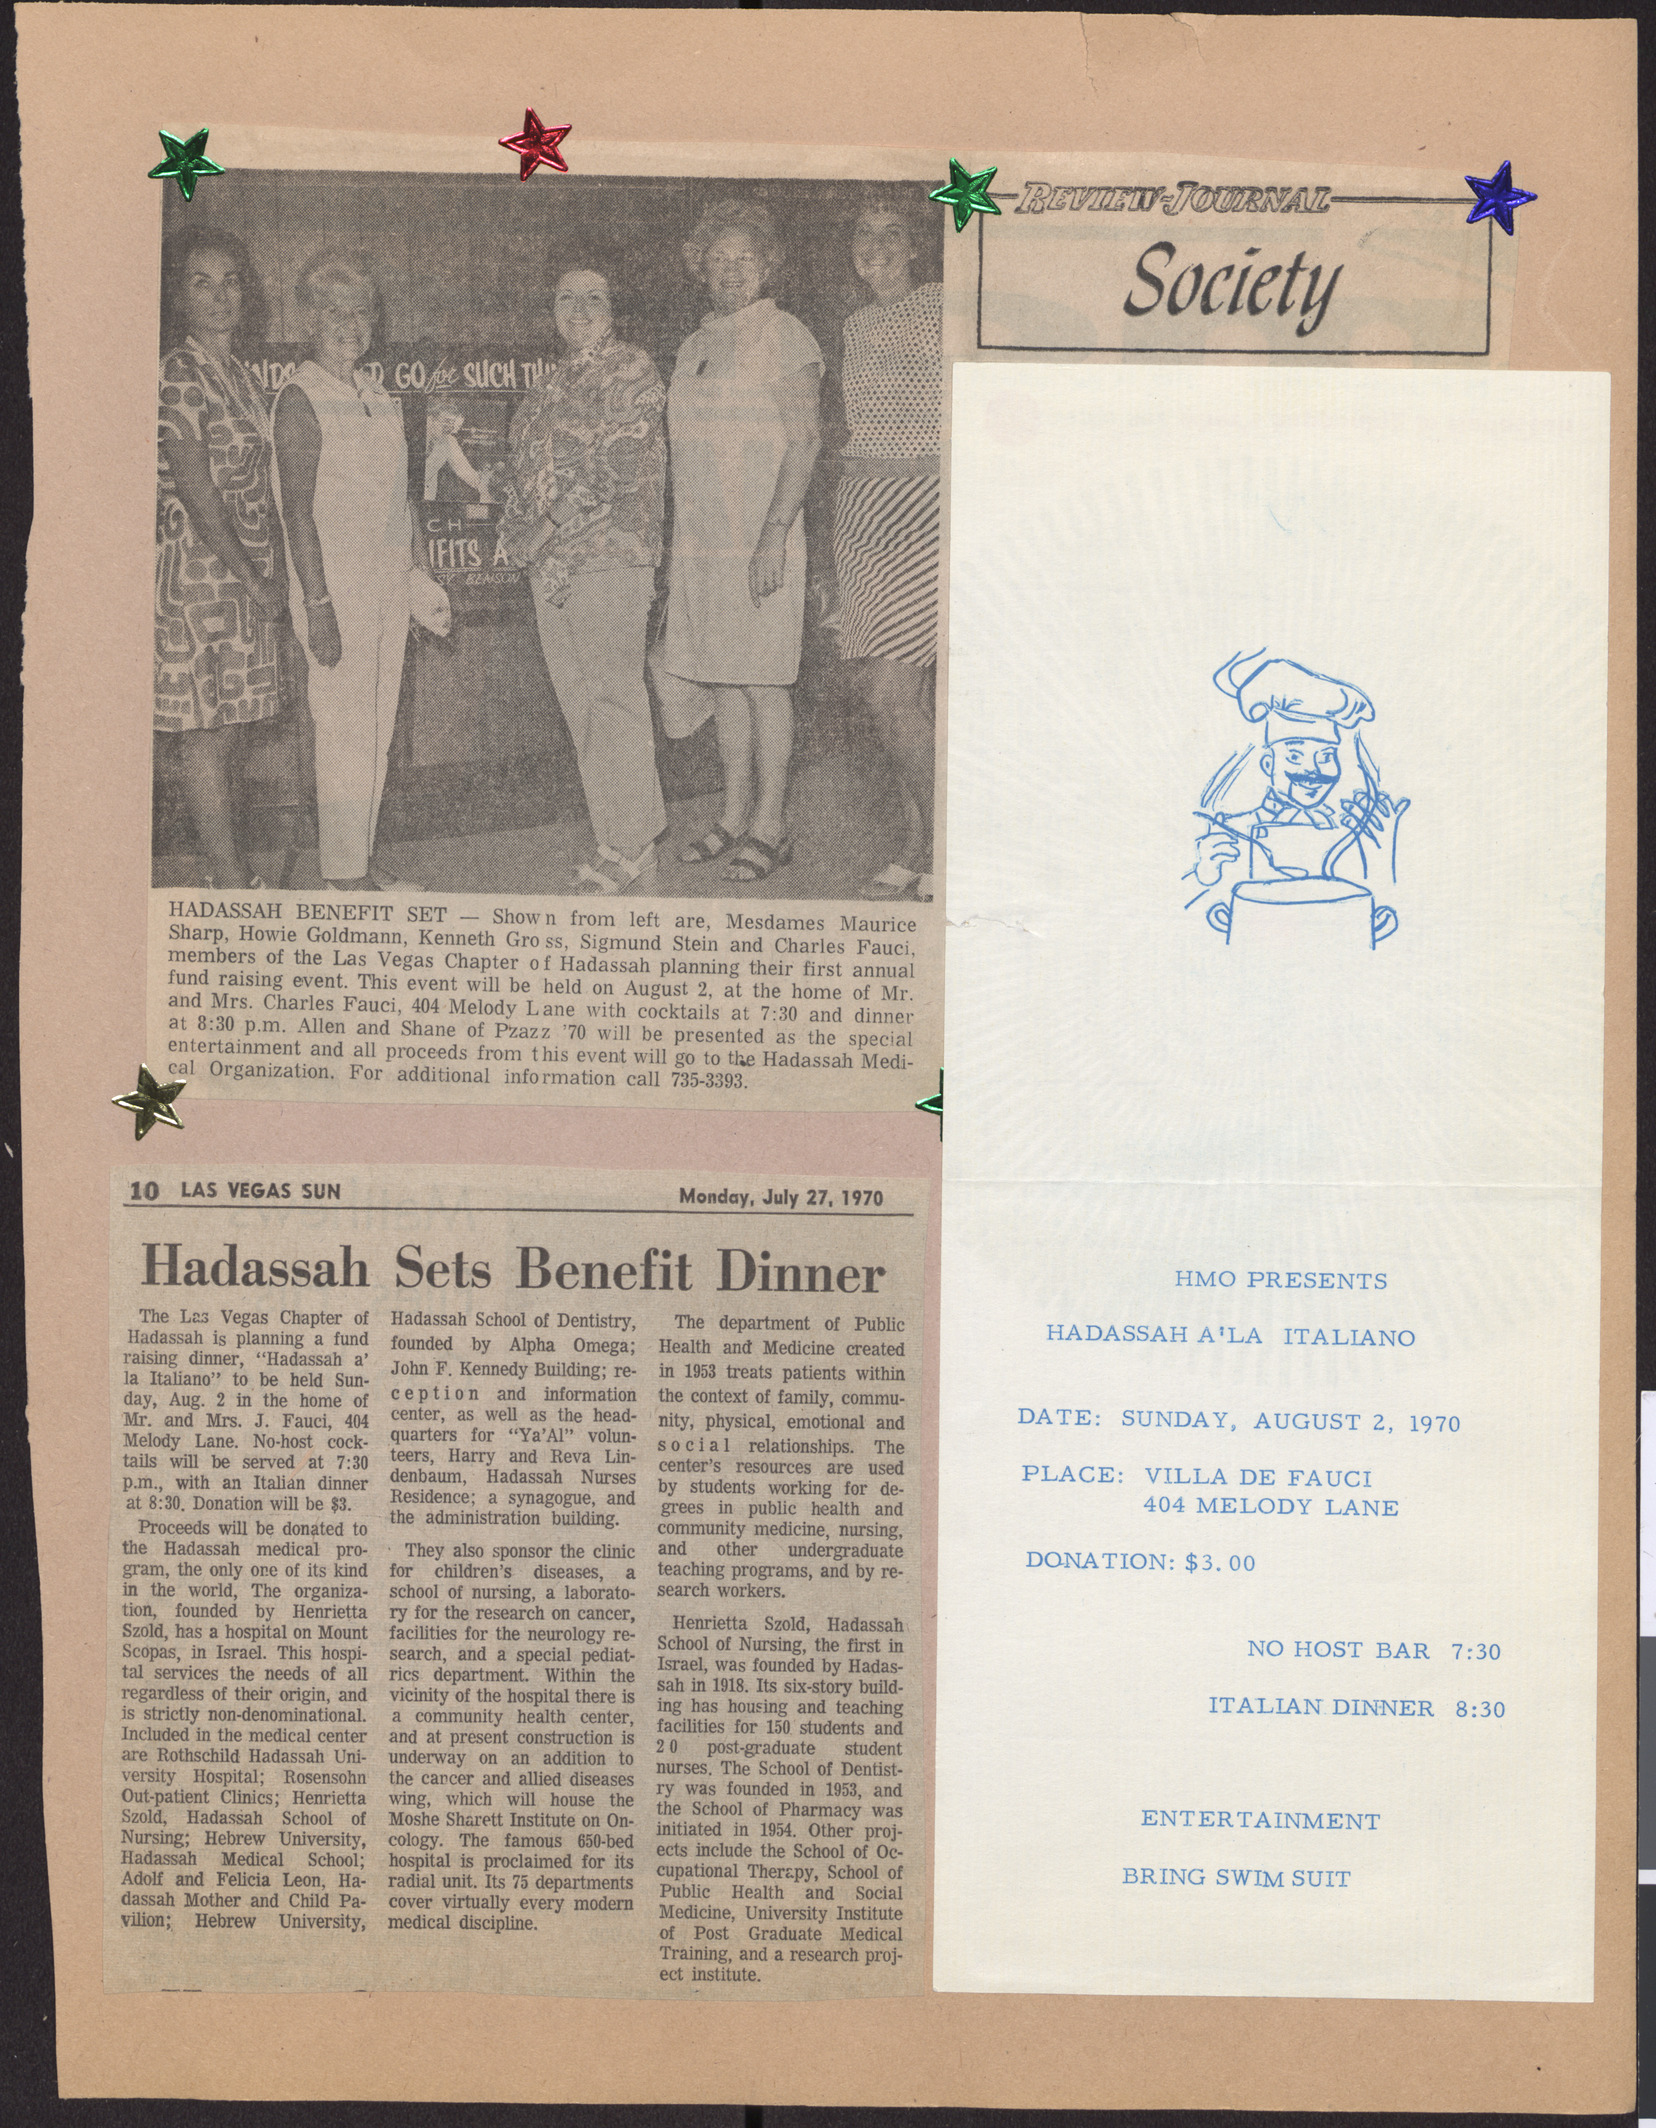 Invitation to Hadassah benefit event, August 2, 1970